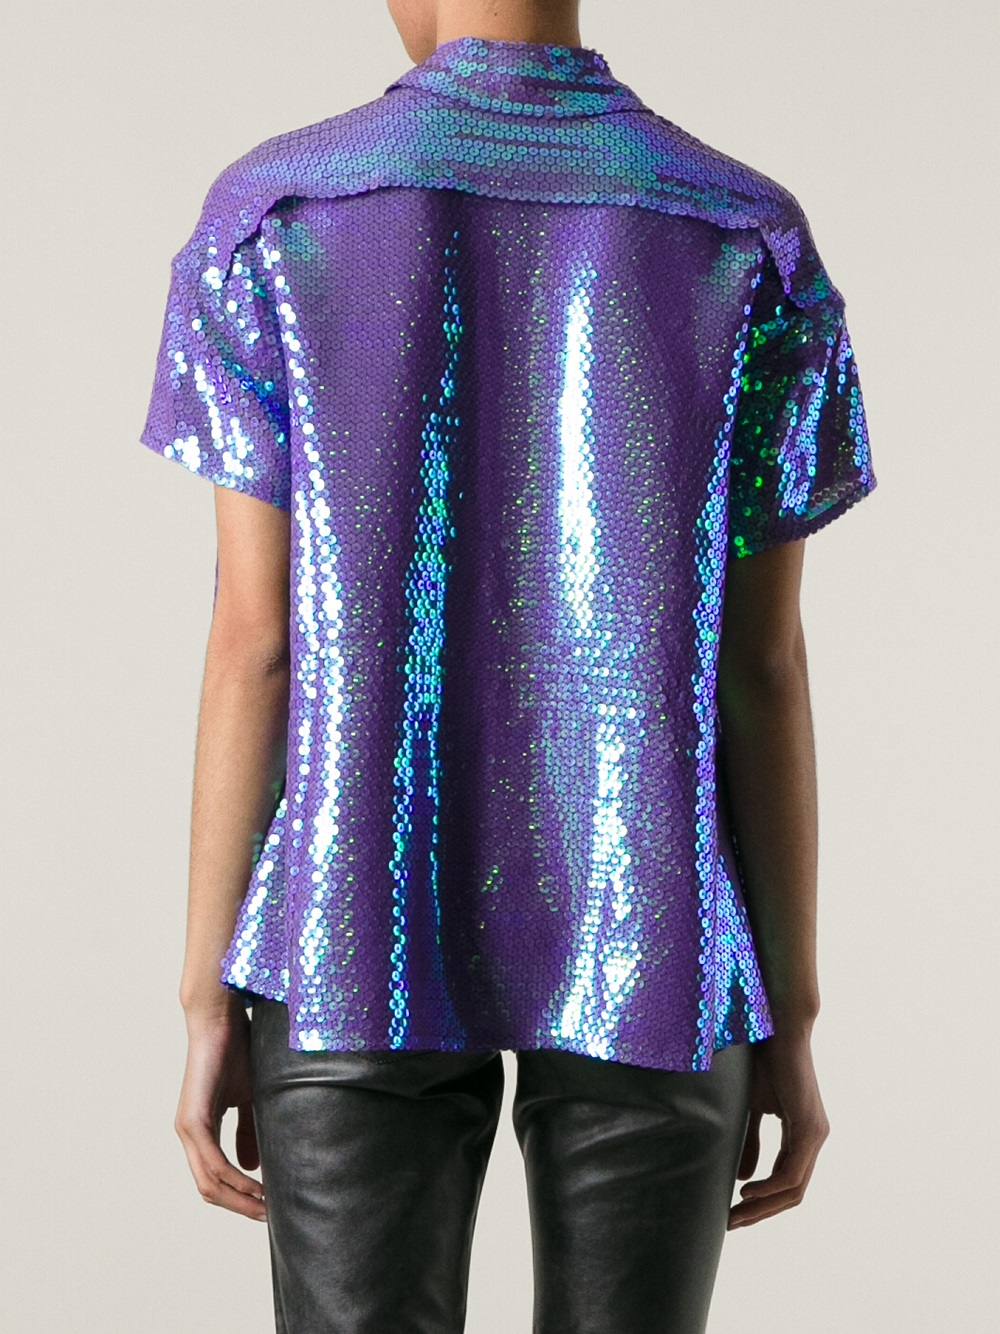 Lyst - Acne Studios Sequin Shirt in Purple